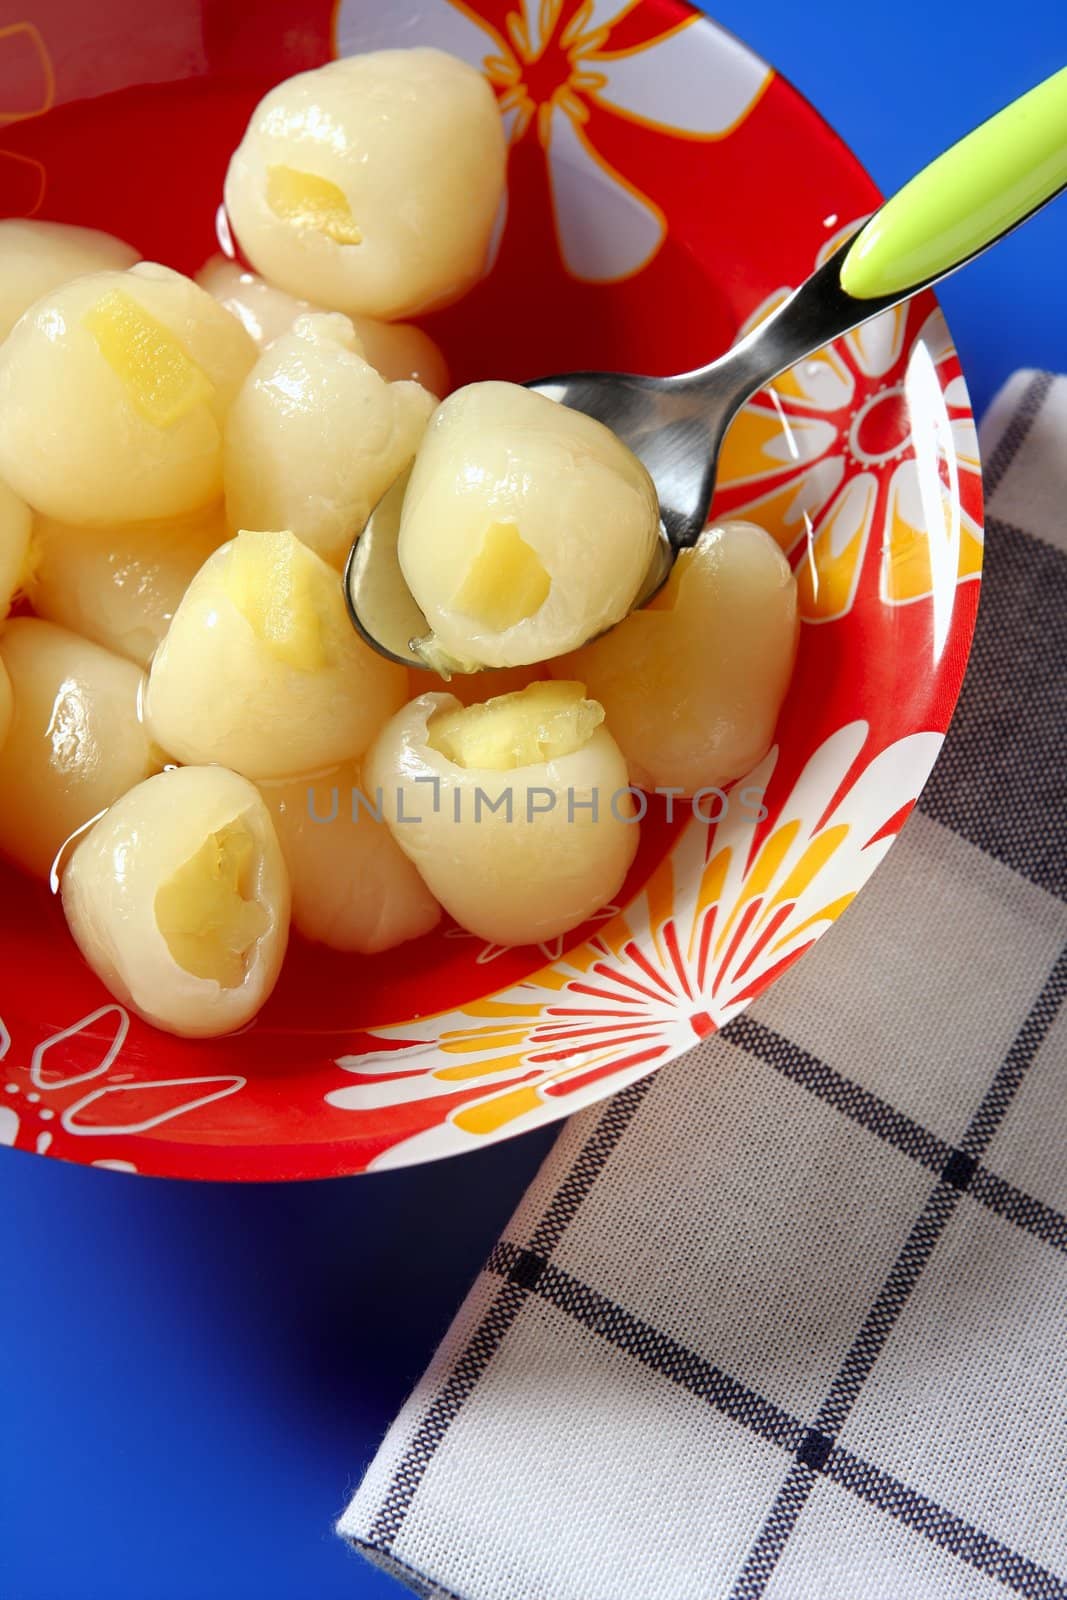 Rambutan, lychee with pineapple inside dessert, over blue